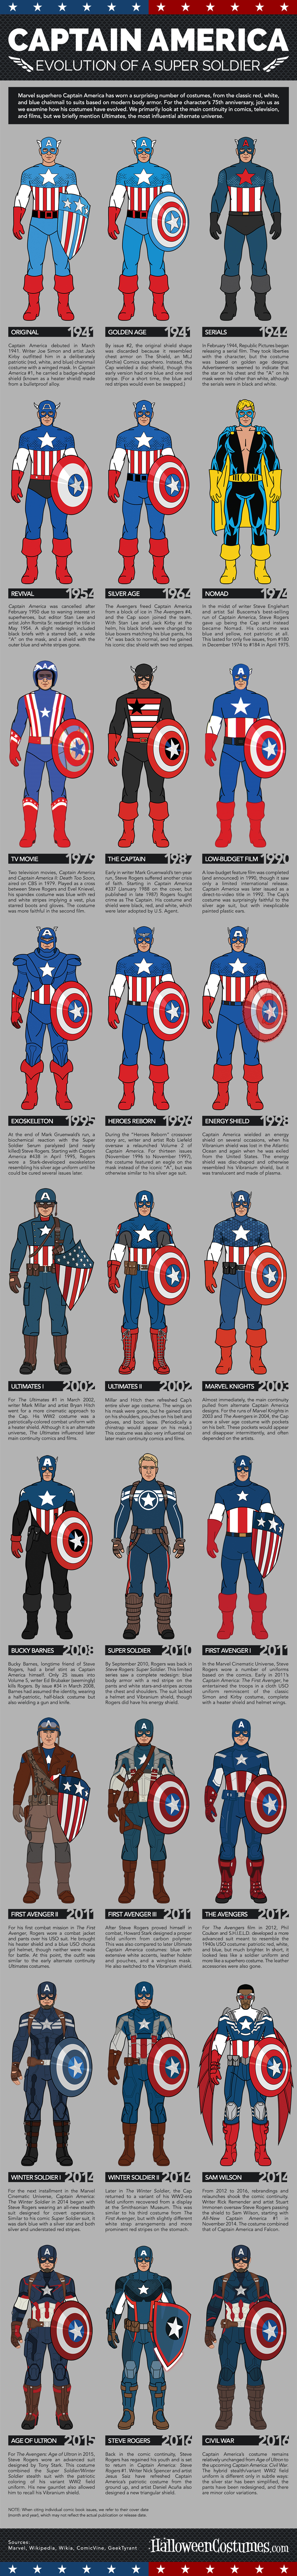 Captain-America-Costumes-Infographic.jpg